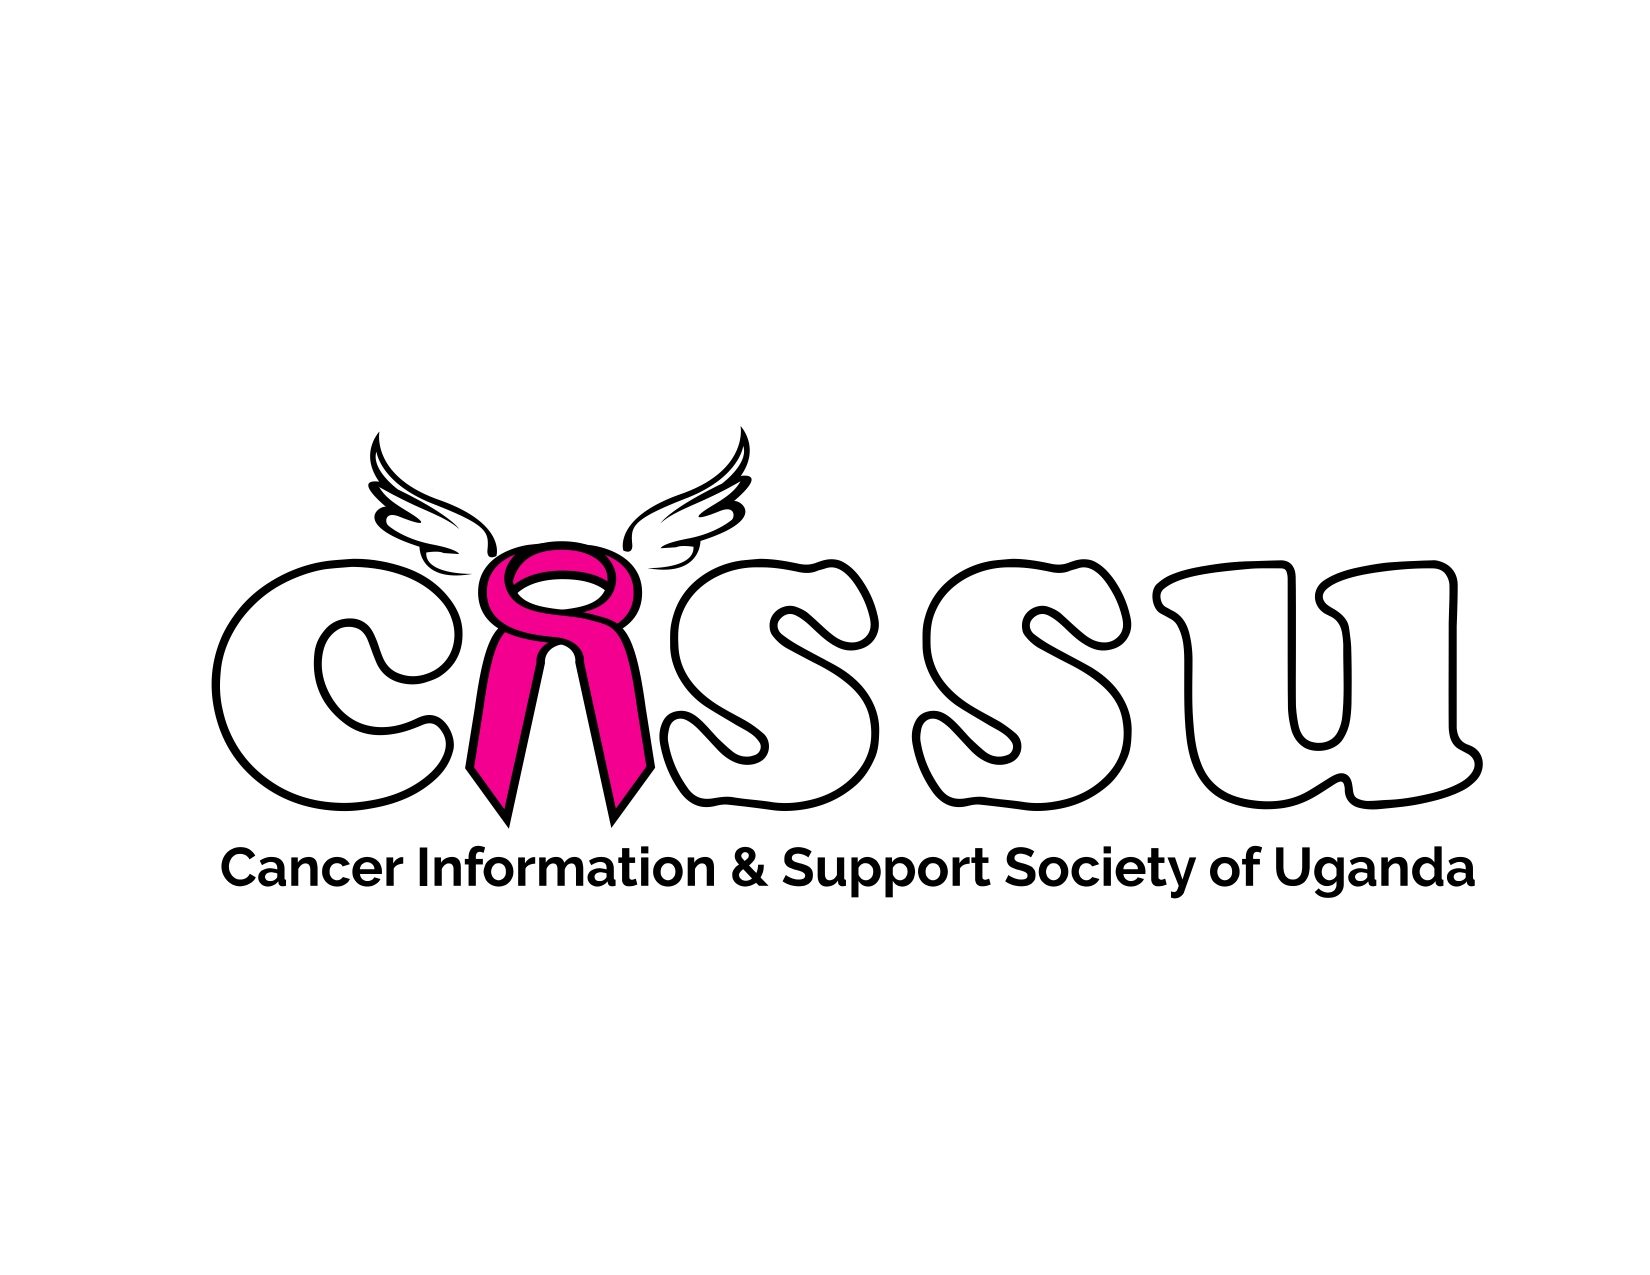 Cancer Information & Support Society of Uganda